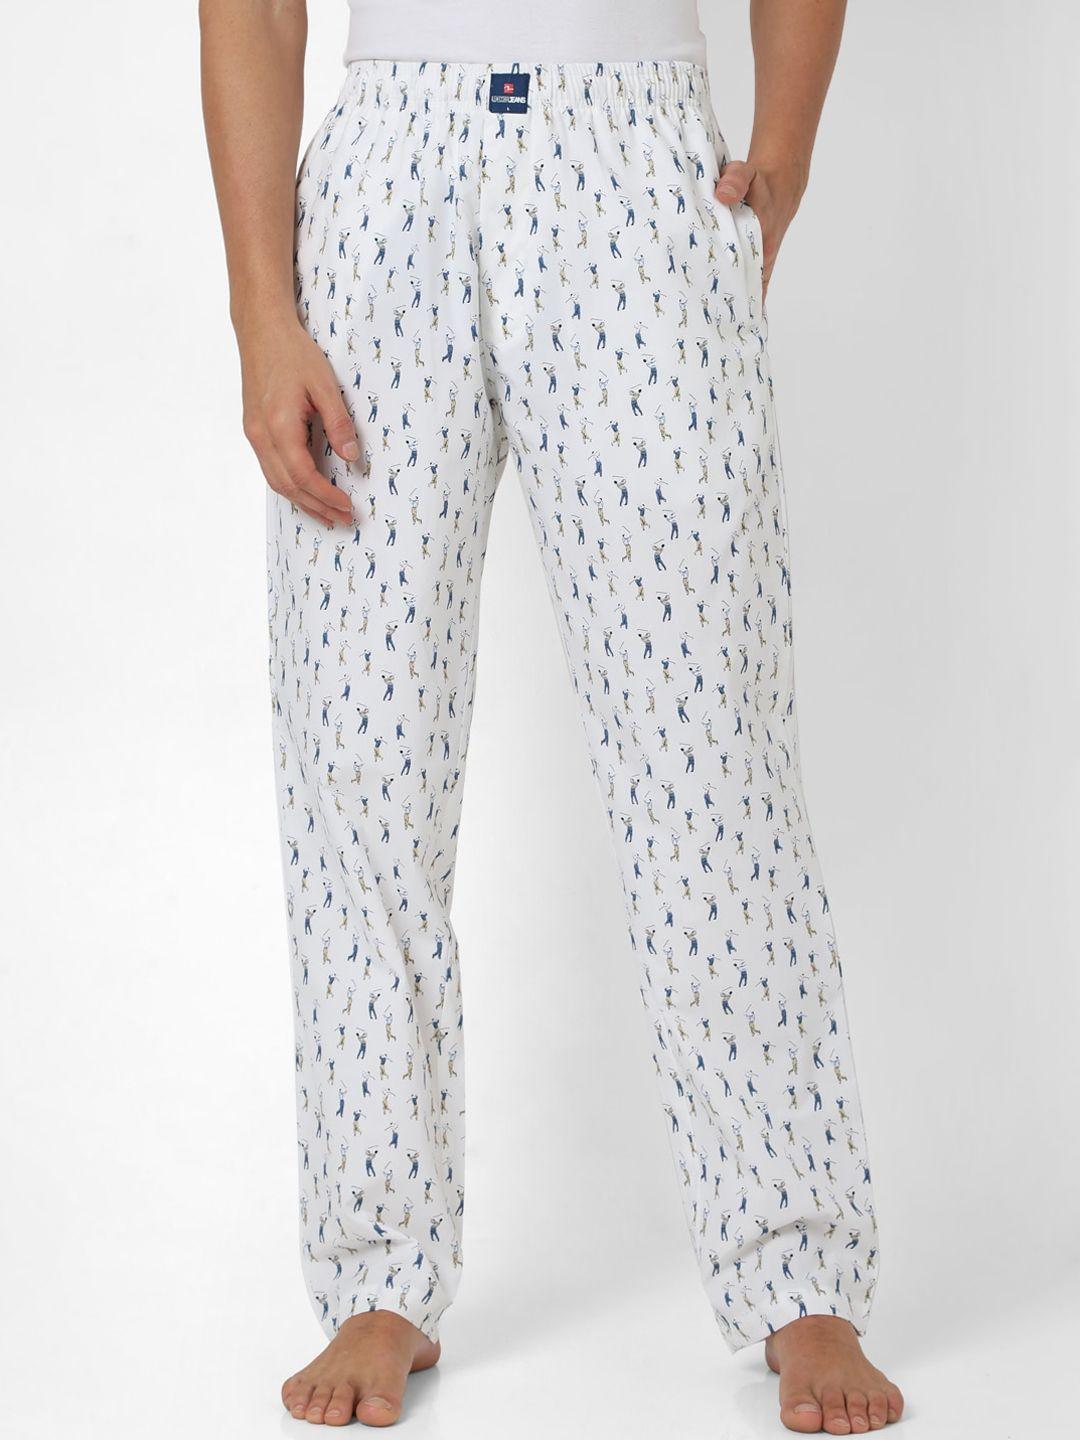 underjeans-by-spykar-men-white-printed-cotton-lounge-pants